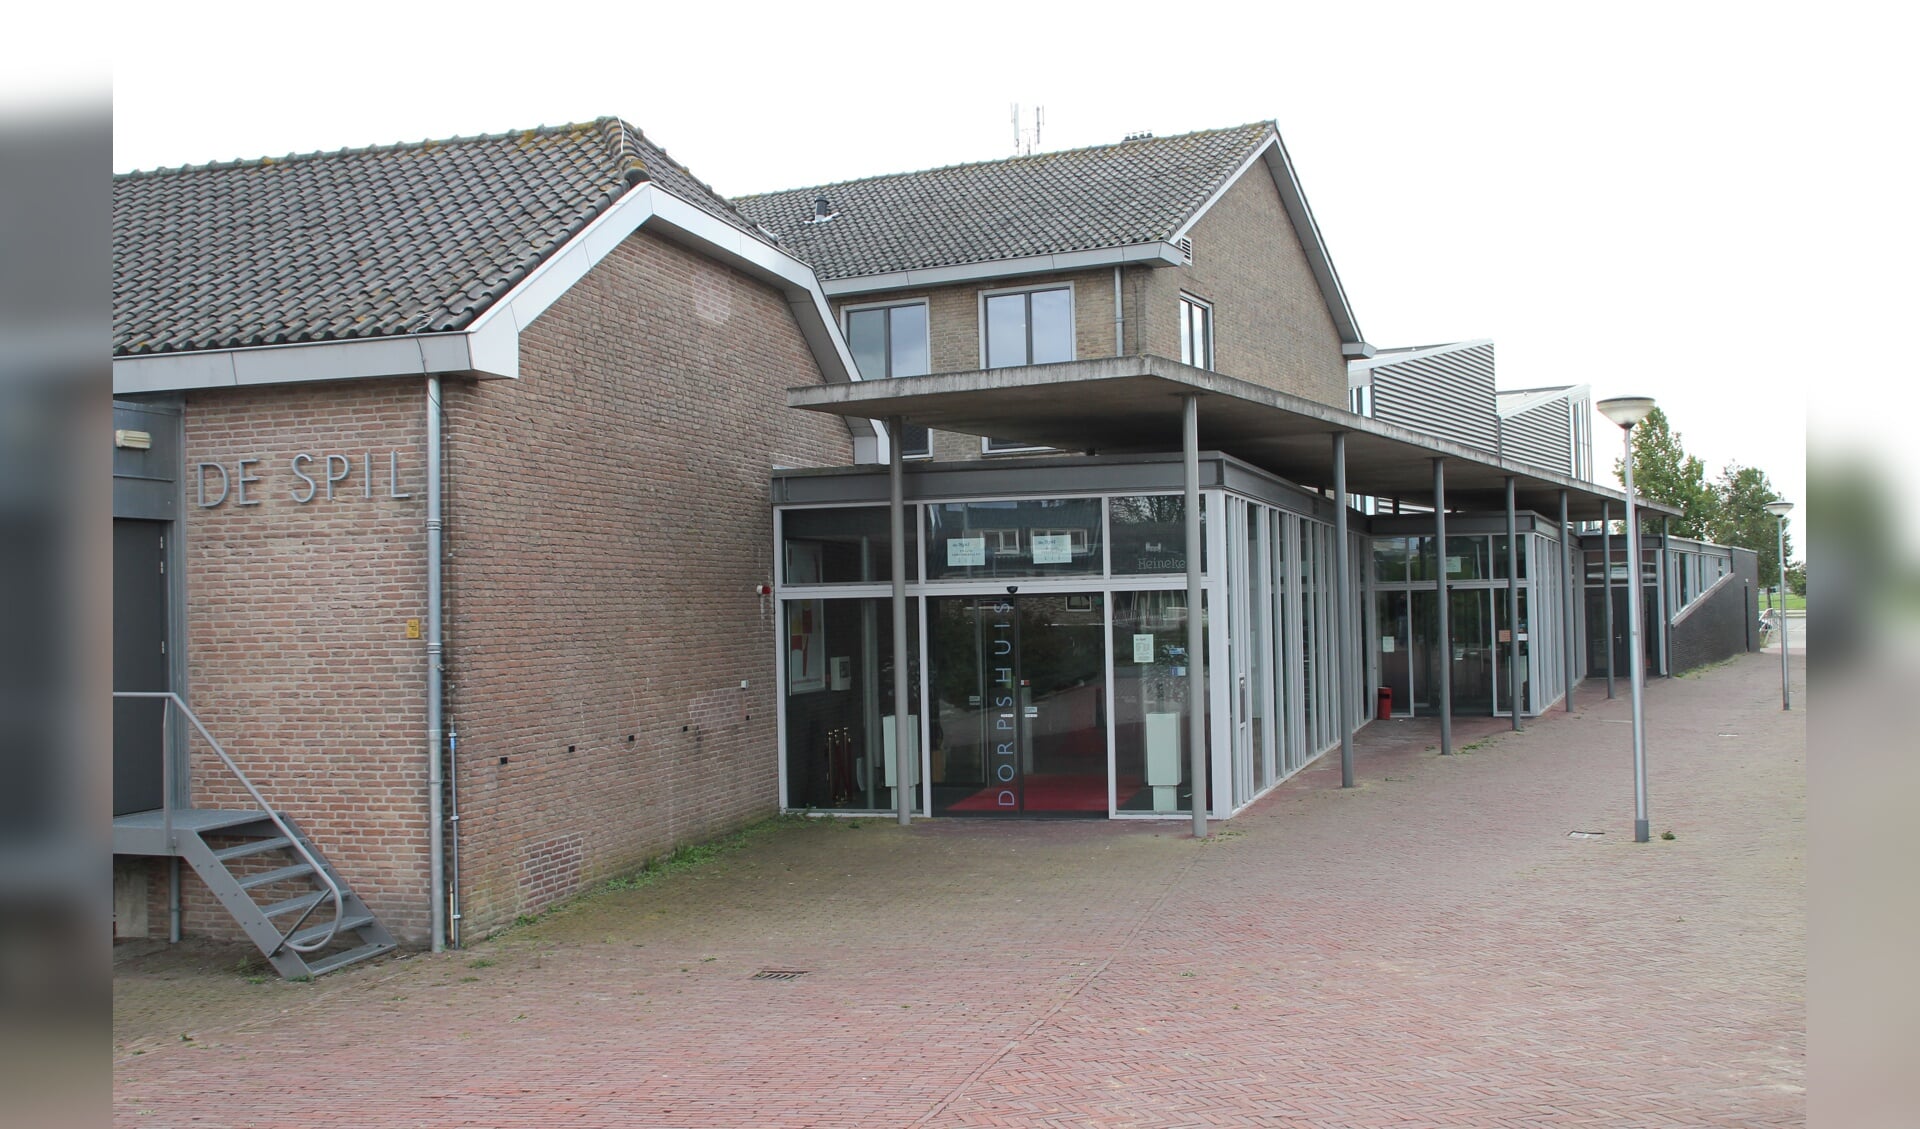 • Dorpshuis De Spil in Bleskensgraaf.